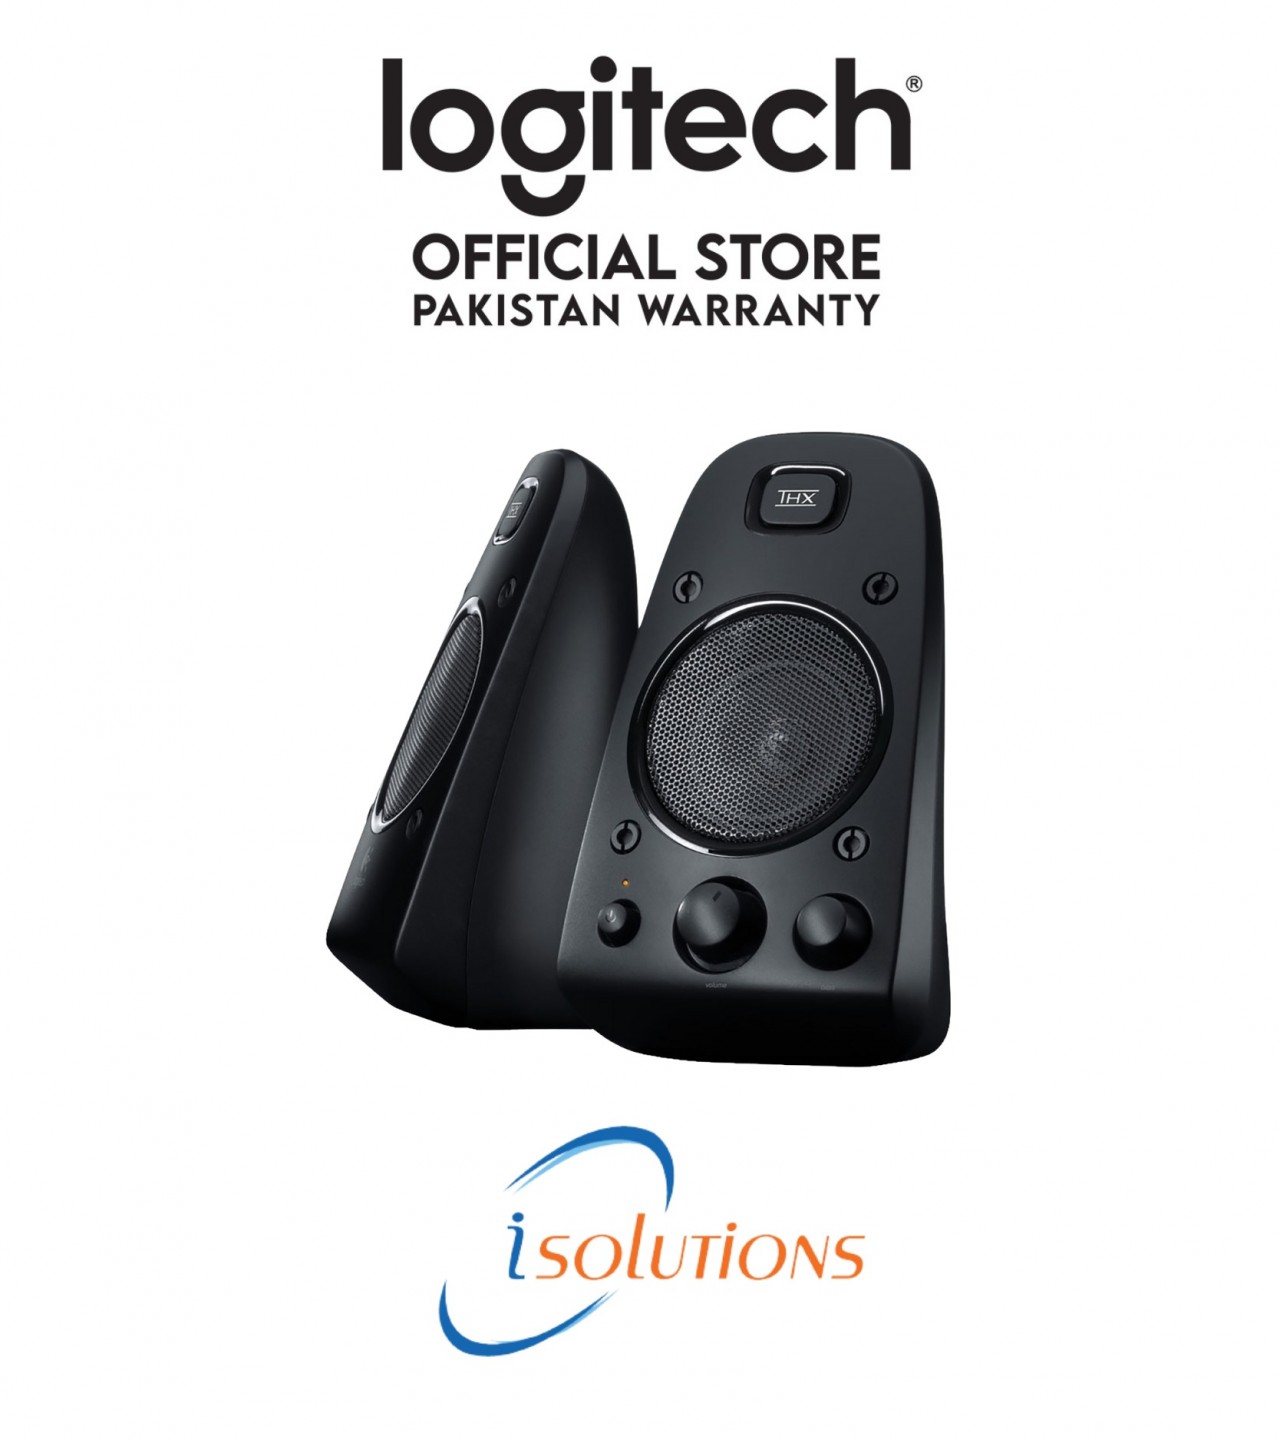 Z623 Speaker System with Subwoofer - Logitech Pakistan